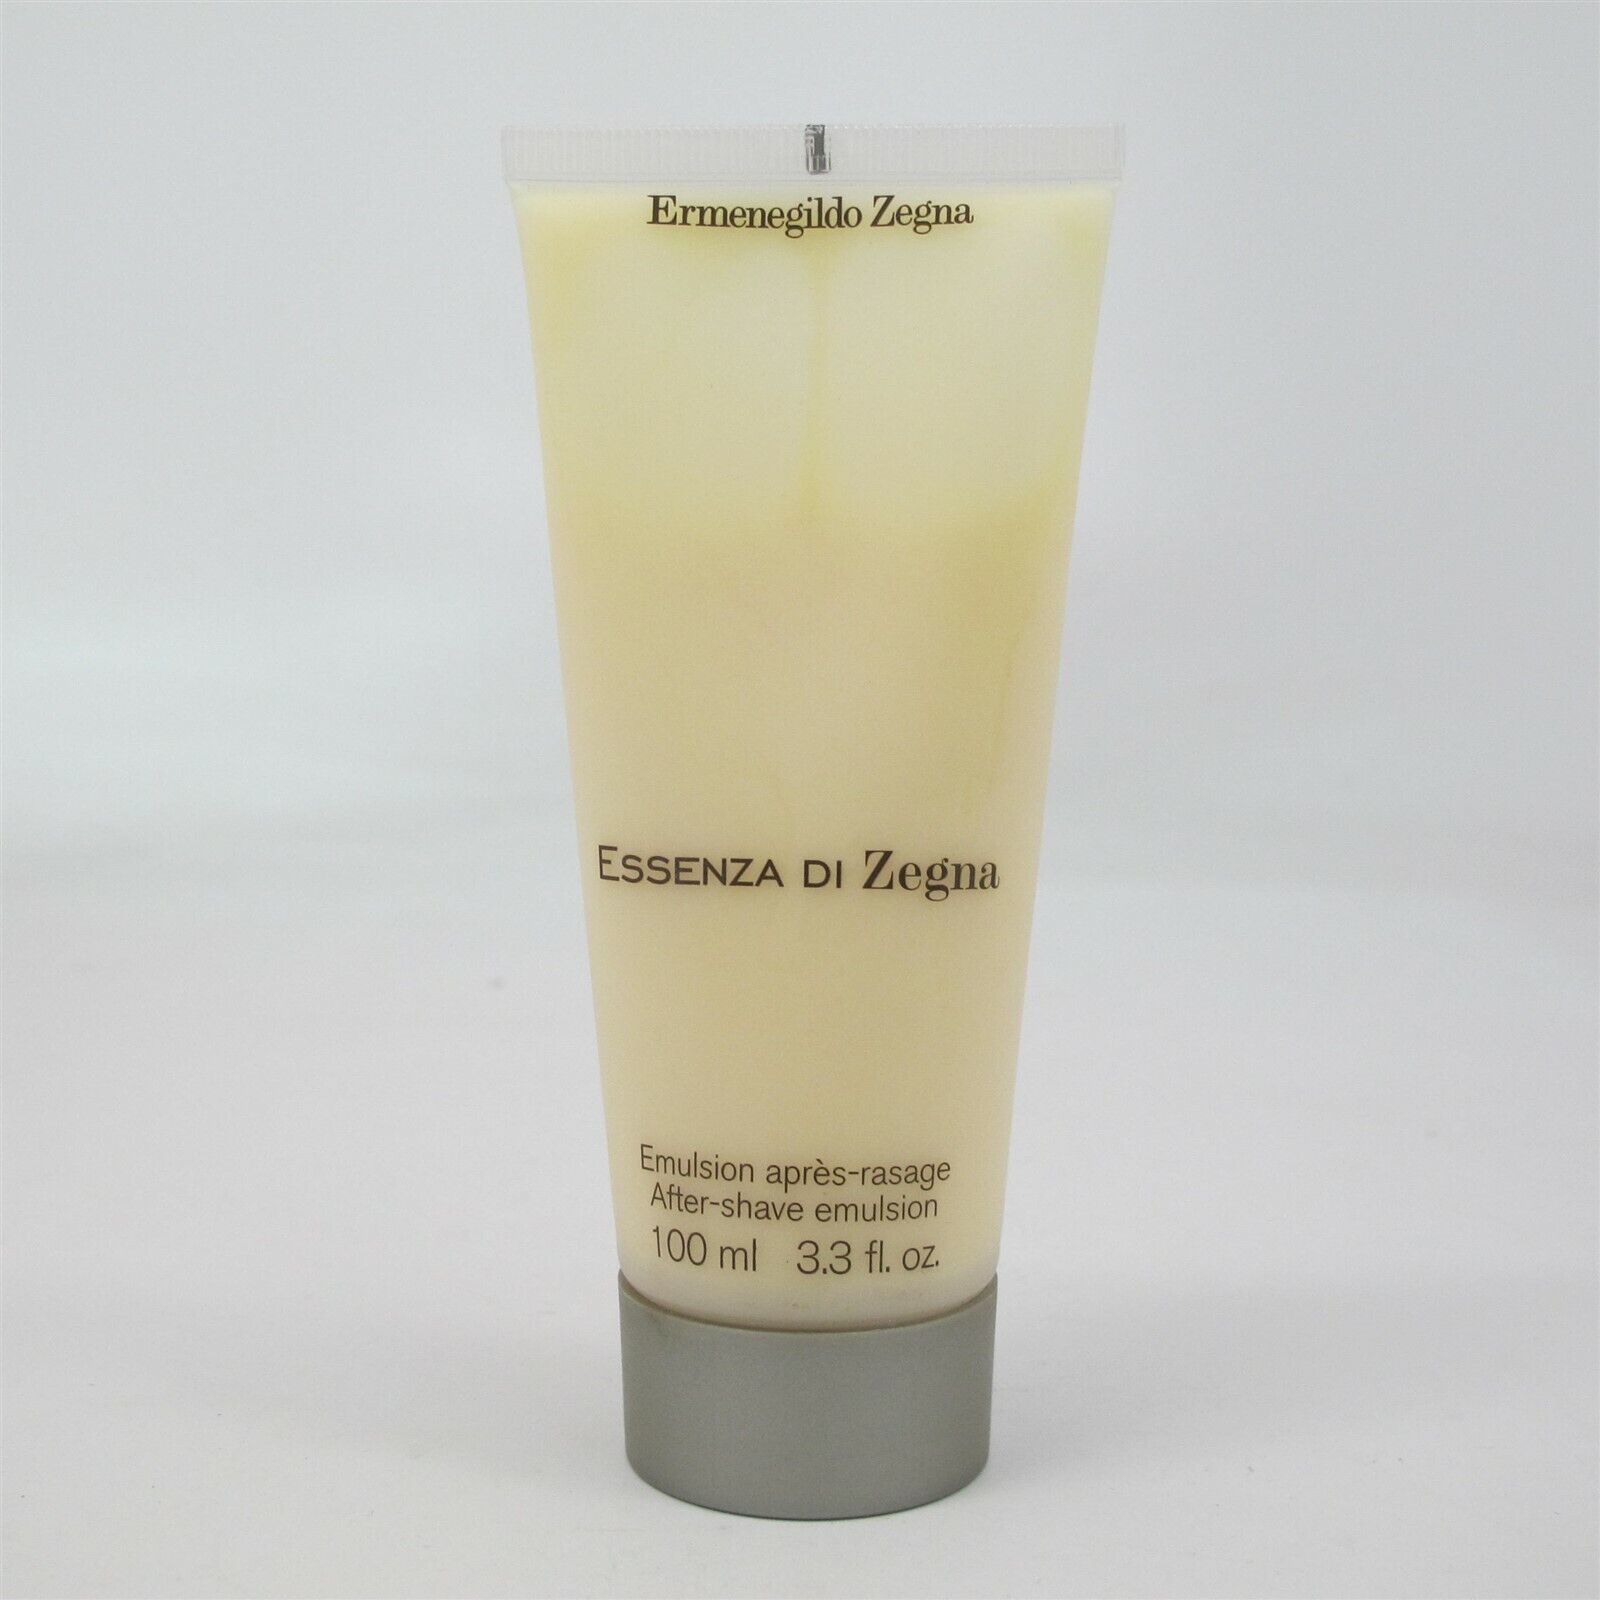 ESSENZA DI ZEGNA by Ermenegildo Zegna 100 ml/ 3.3 oz After Shave Emulsion Tube - $49.49